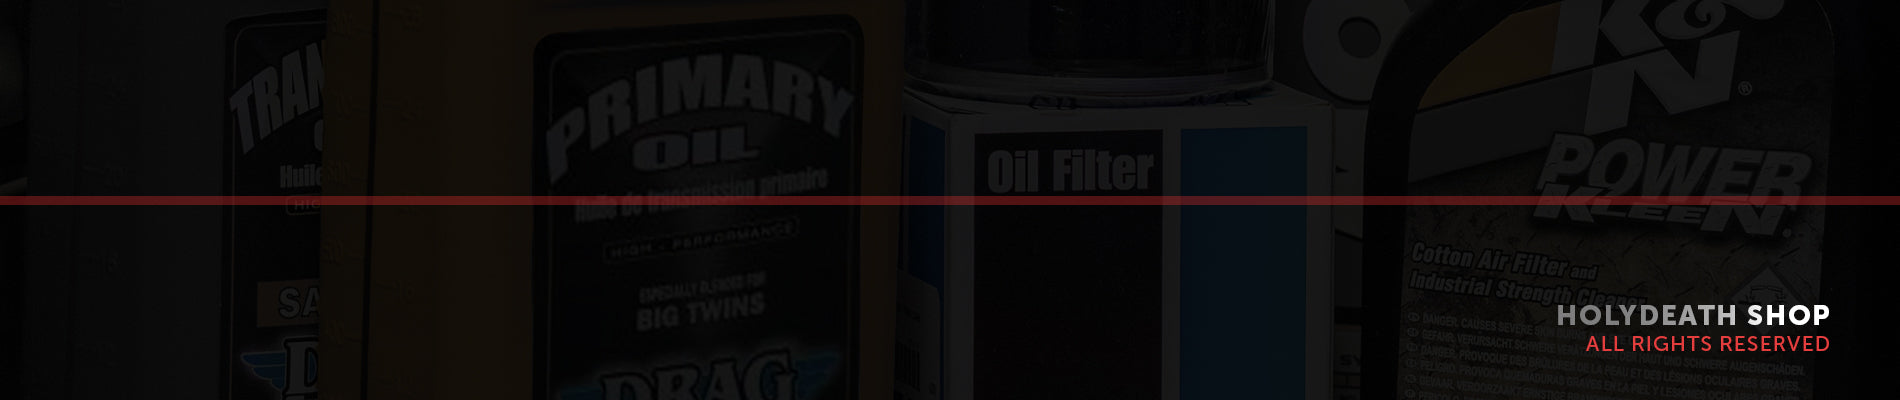 Oil and Fluids